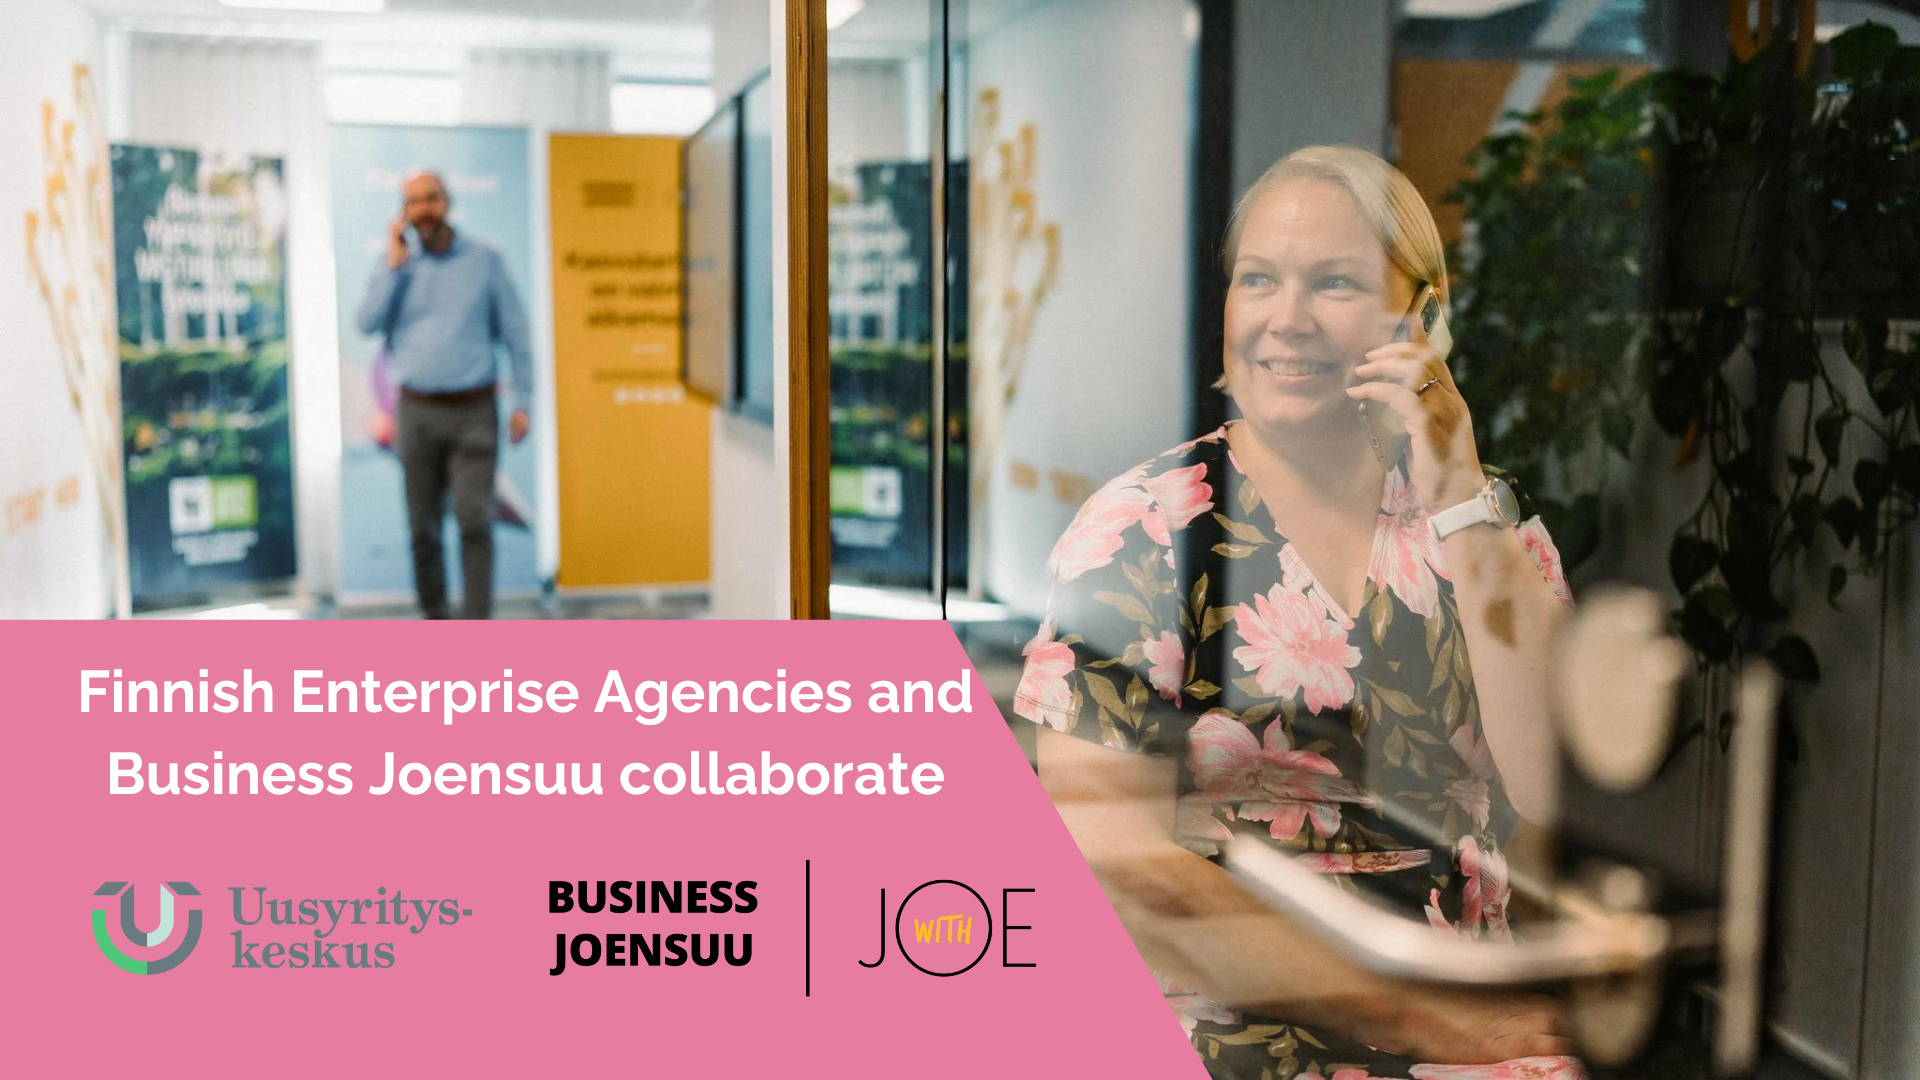 Finnish Enterprise Agencies and Business Joensuu collaborate